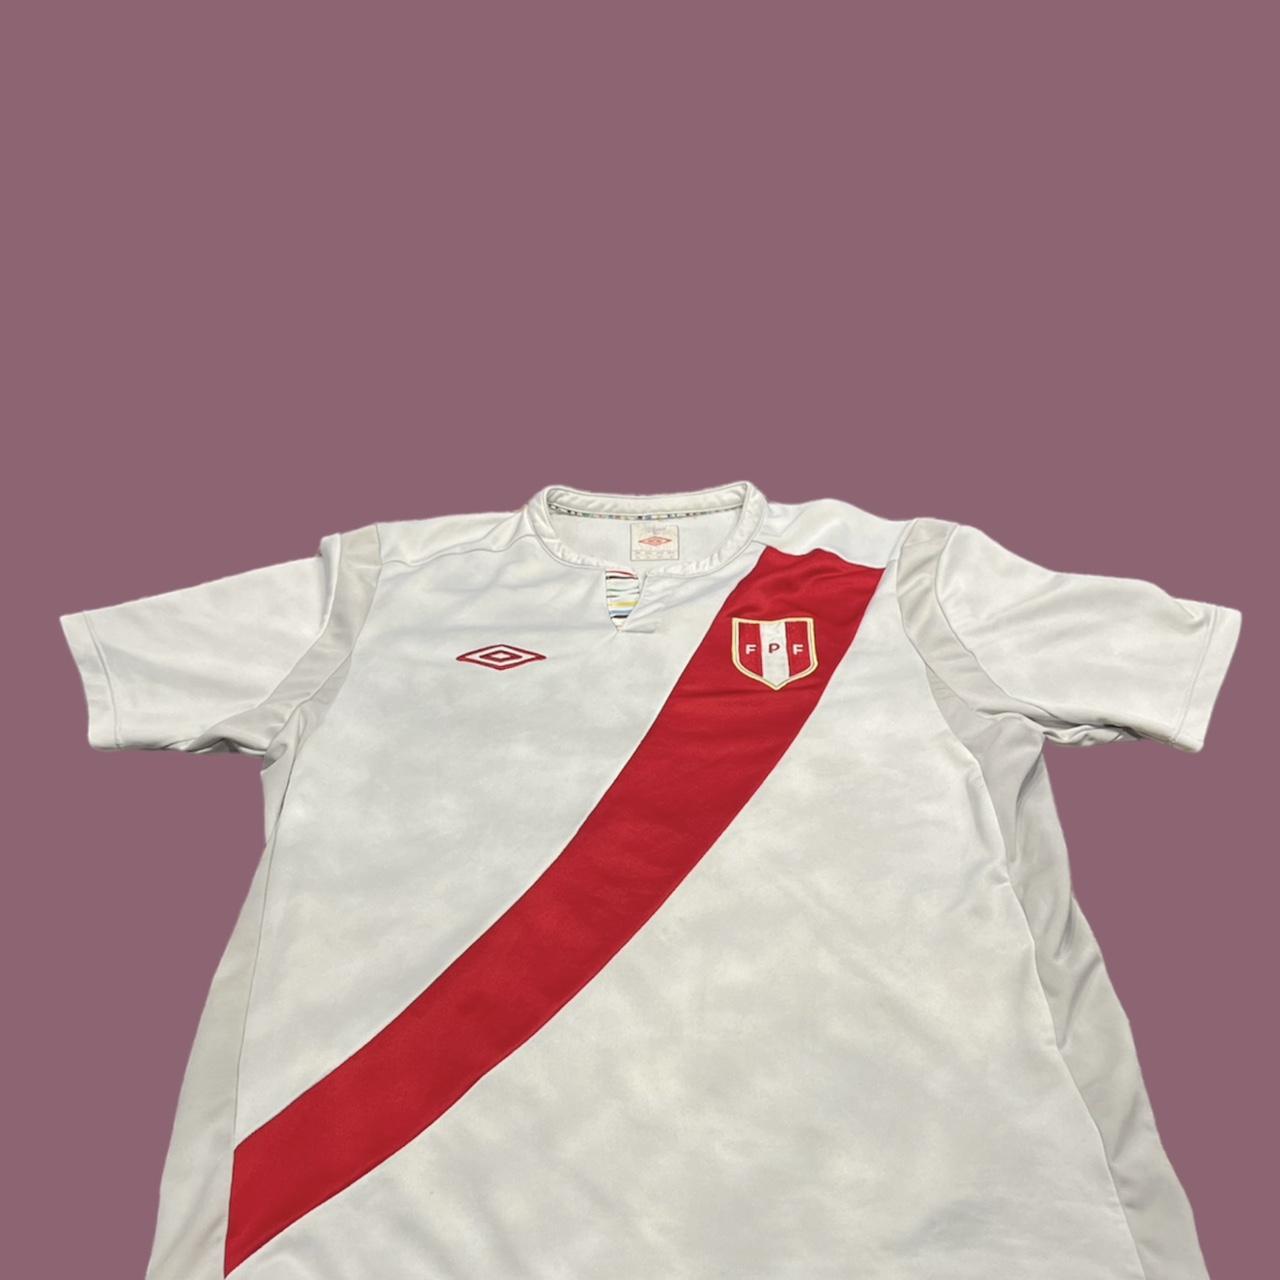 Peru vintage national team jerseys